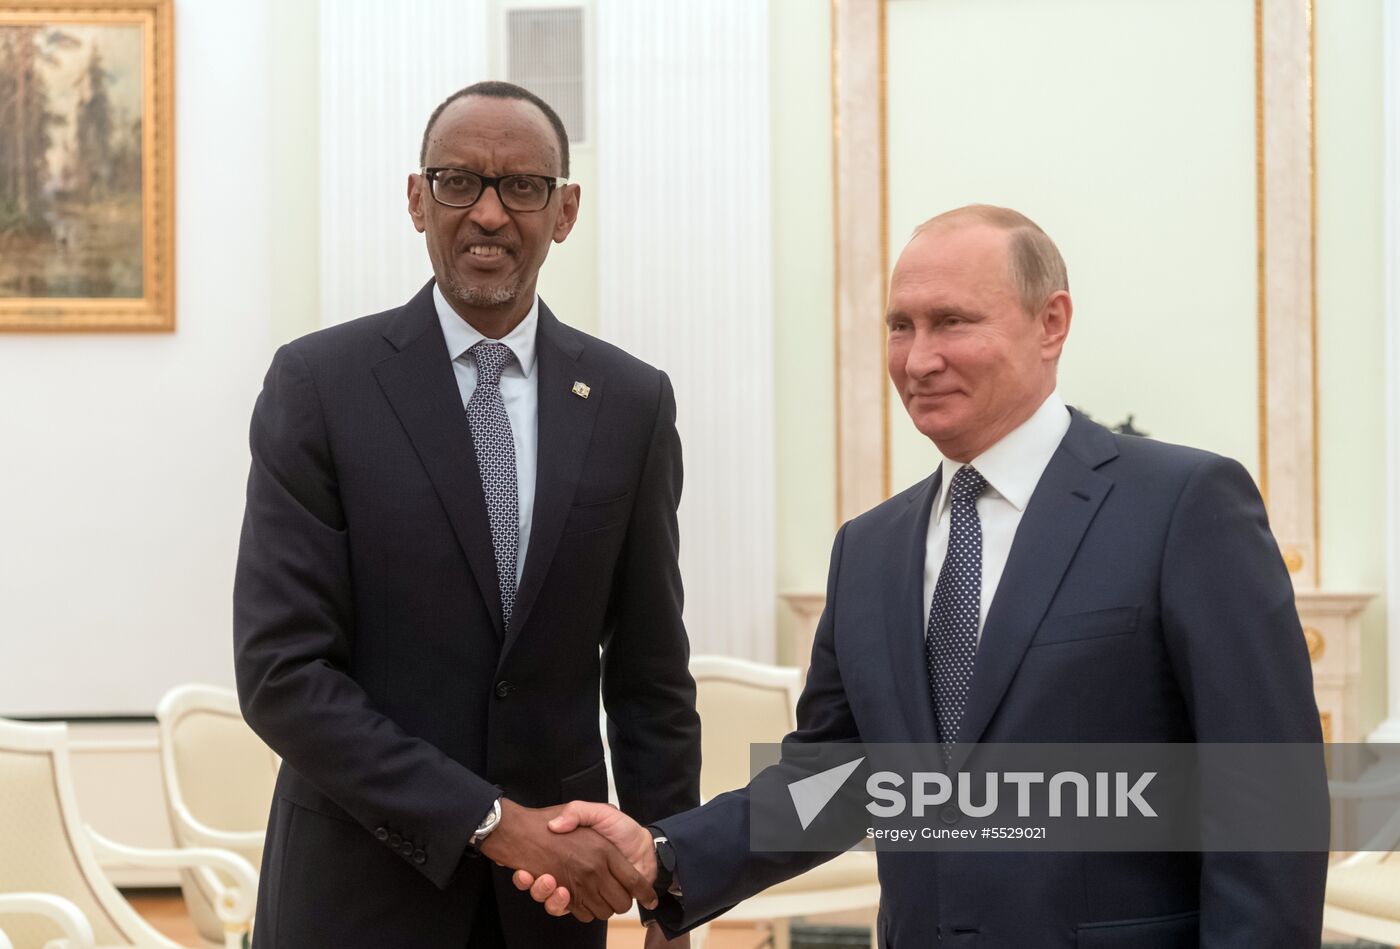 Russian President Vladimir Putin meets with Rwanda's President Paul Kagame